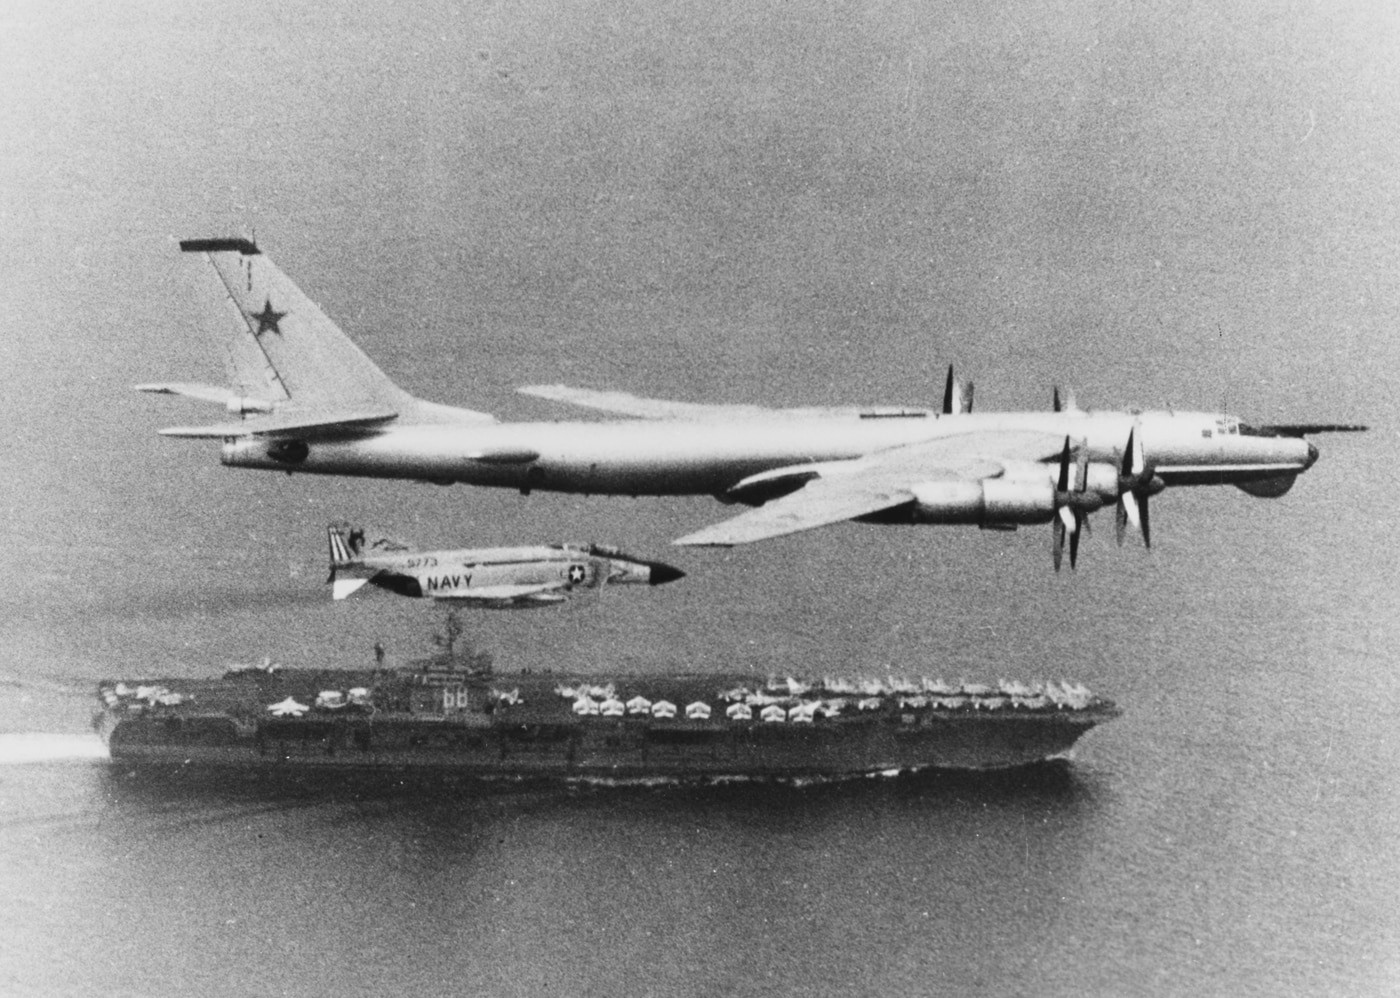 soviet tu-95 bear escorted by f-4j over the uss nimitz